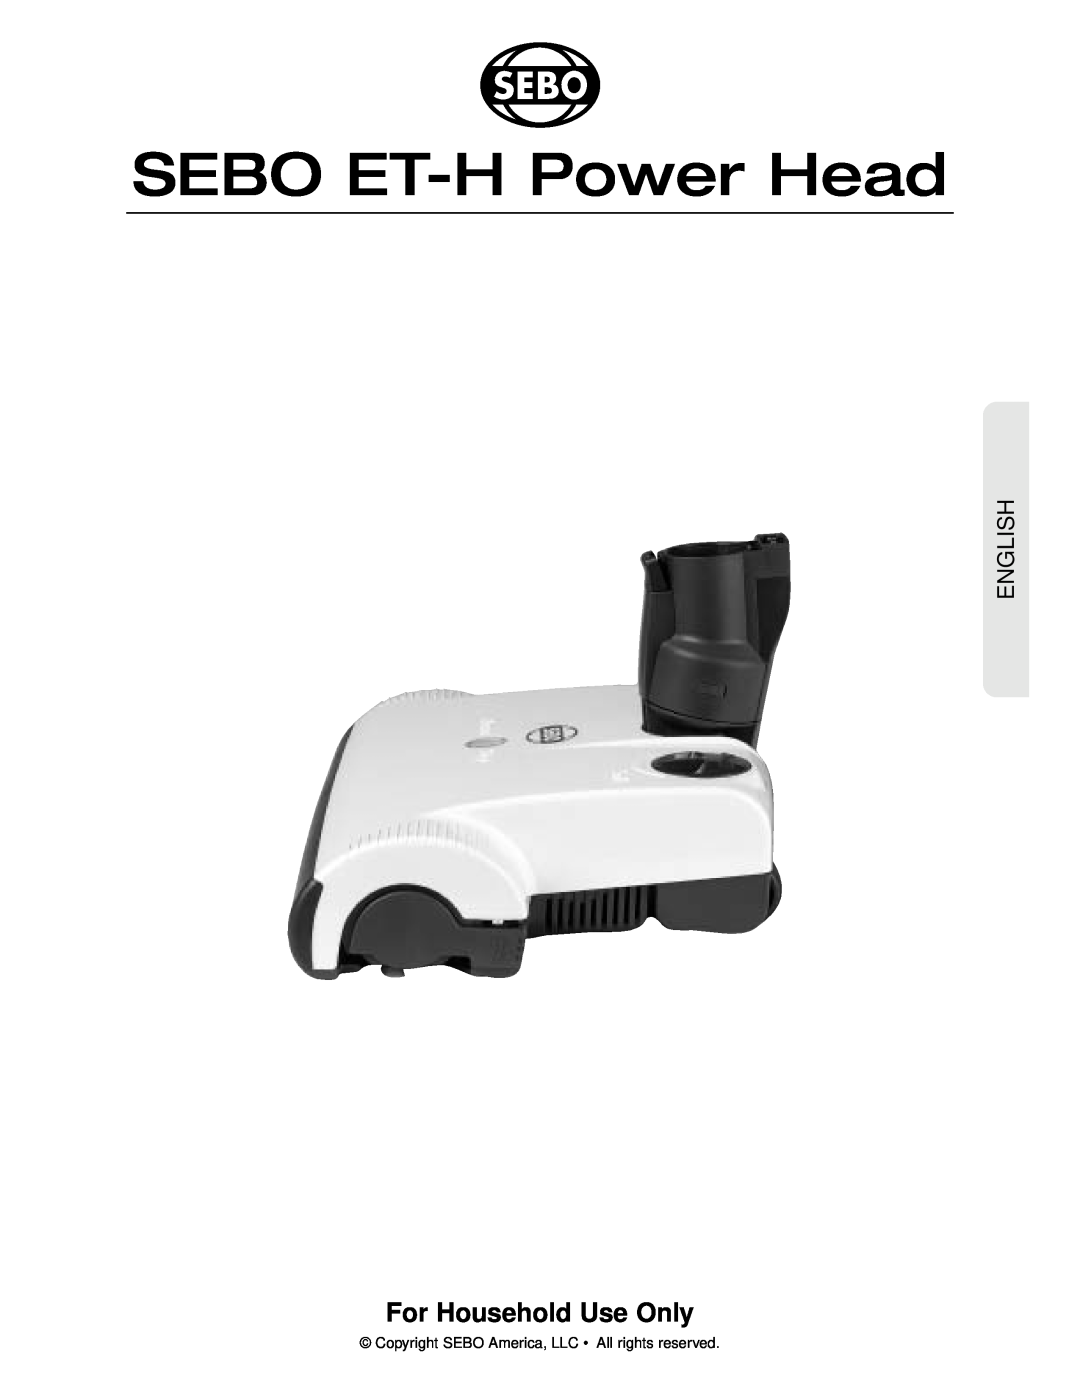 Sebo manual For Household Use Only, SEBO ET-H Power Head, English 